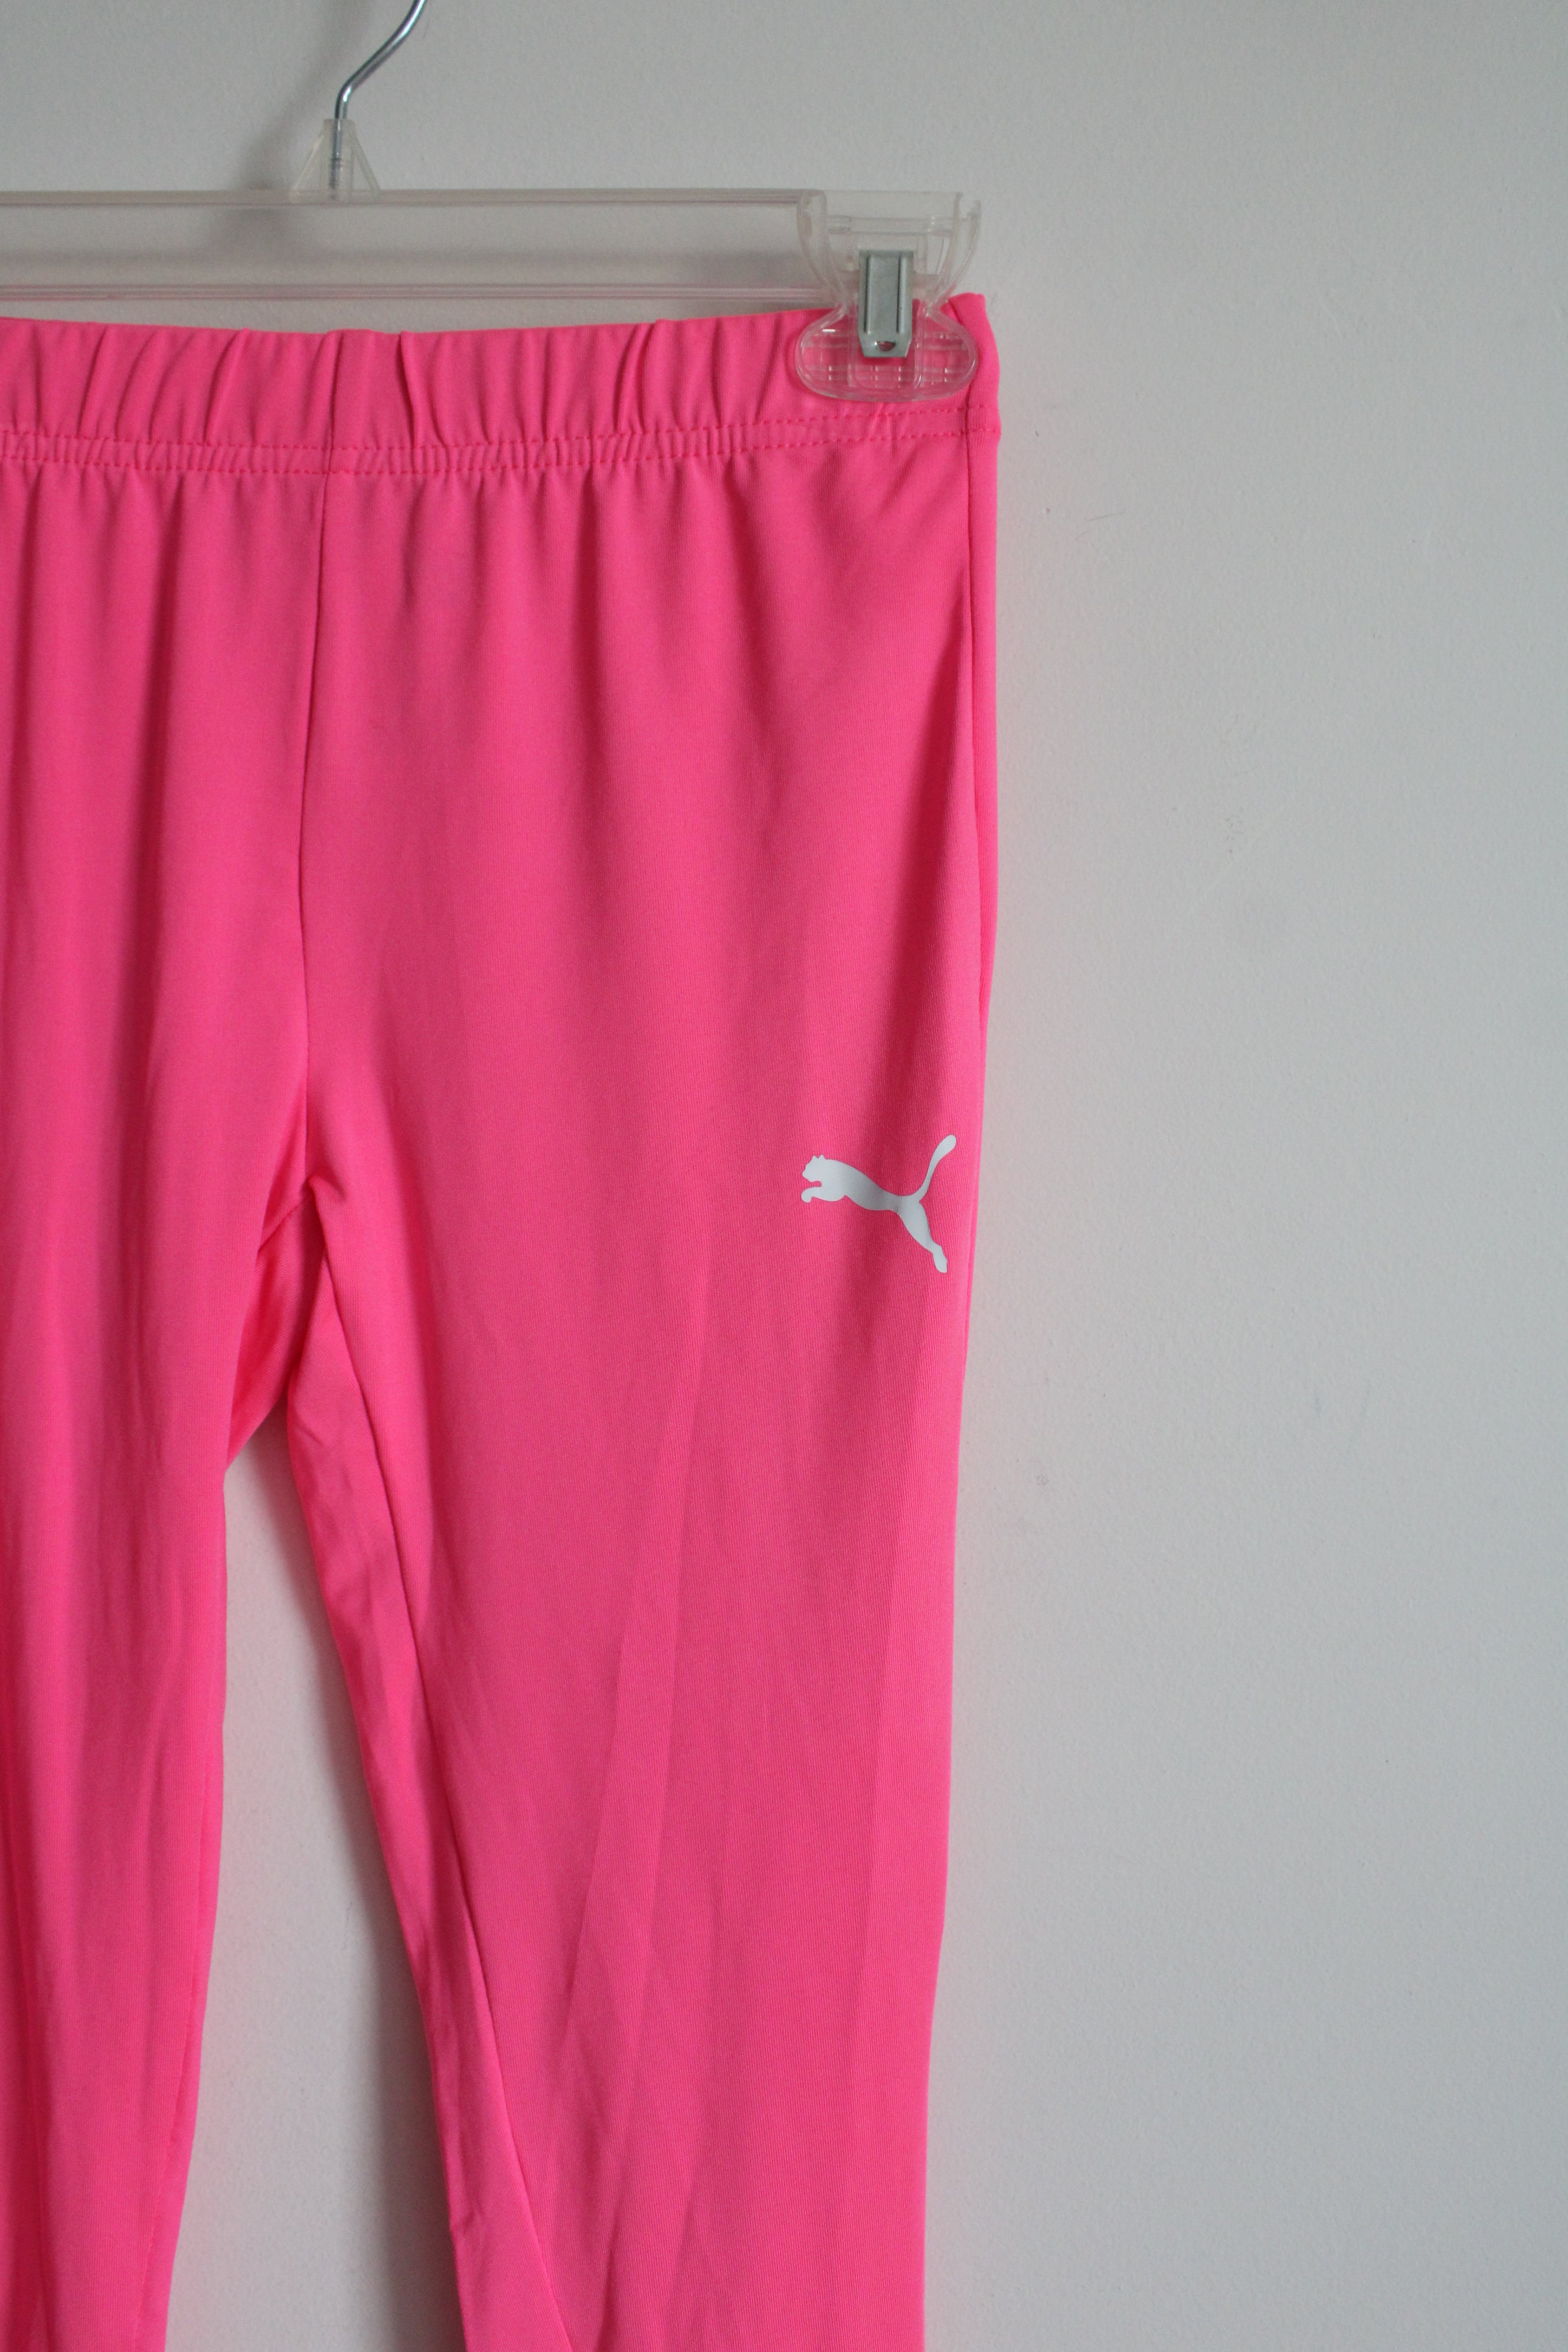 Puma Neon Pink Legging | Youth L (12/14)